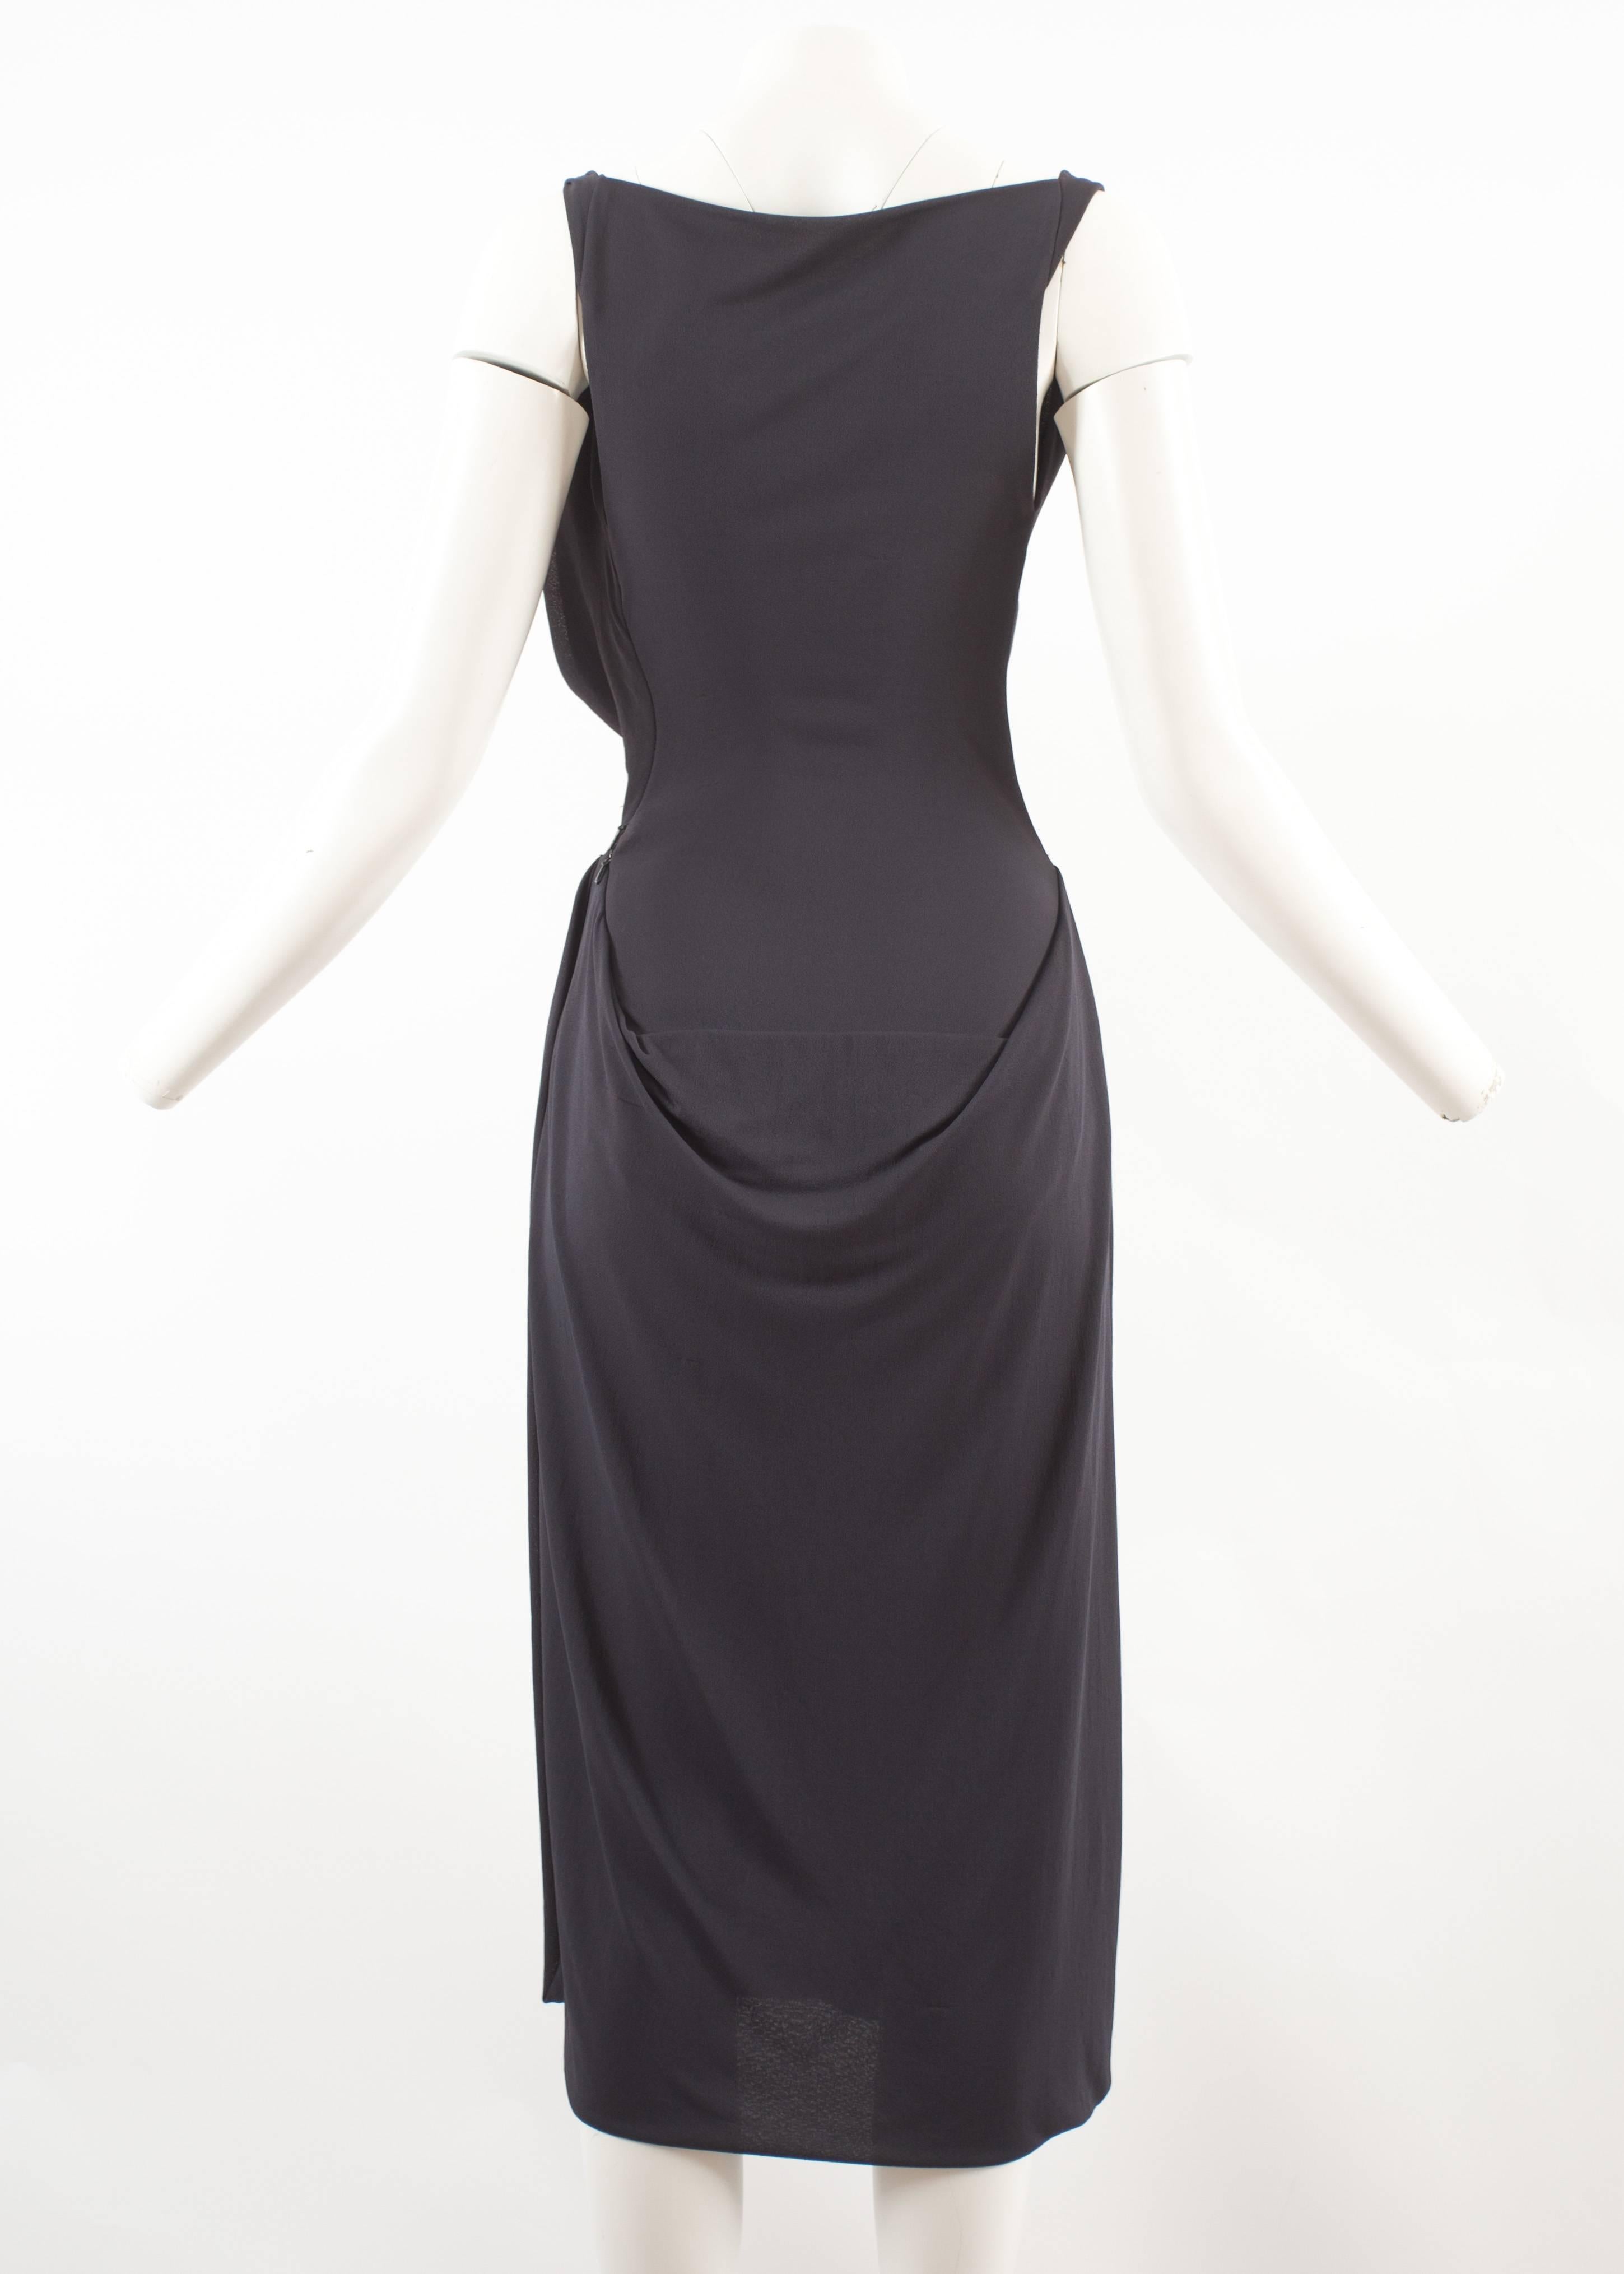 Vivienne Westwood Spring-Summer 1997 mid length draped evening dress at ...